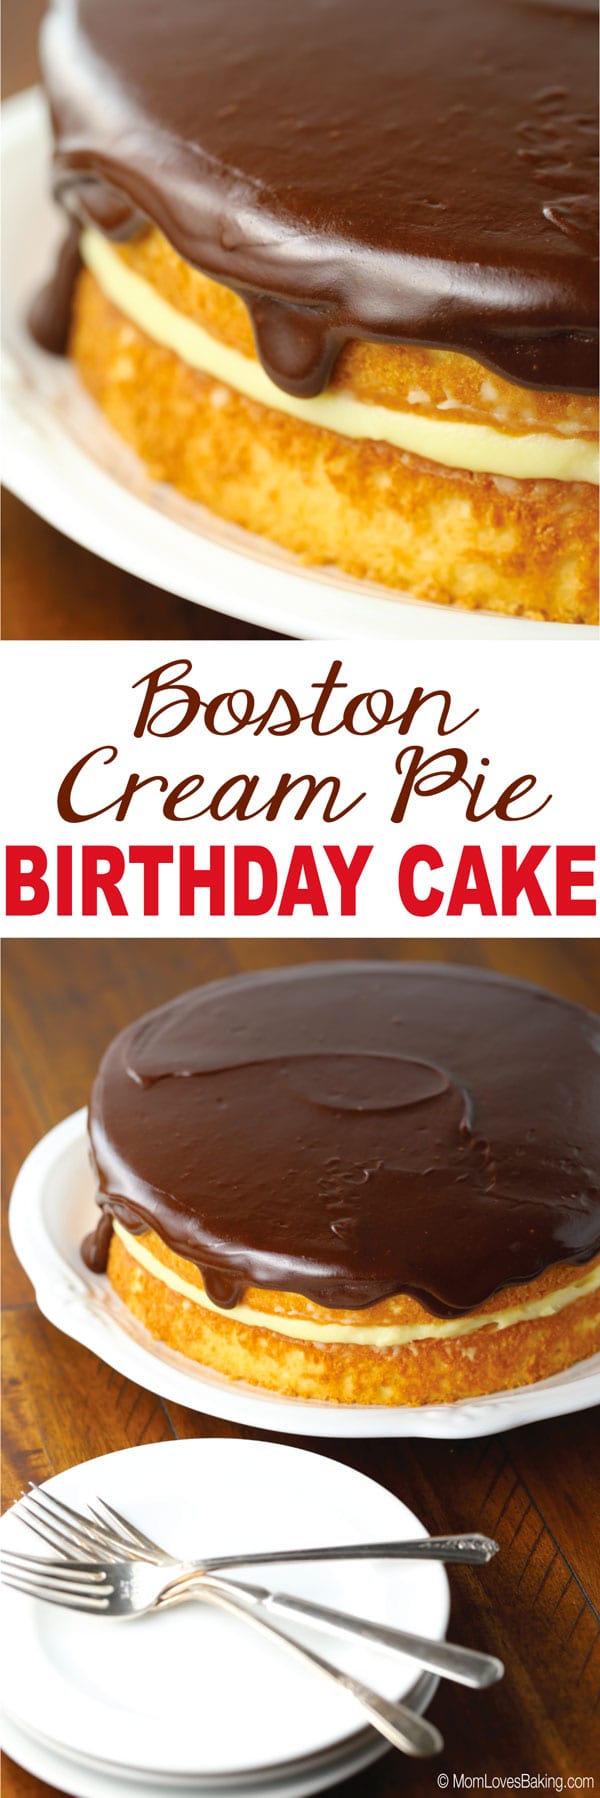 Boston Cream Pie Birthday Cake